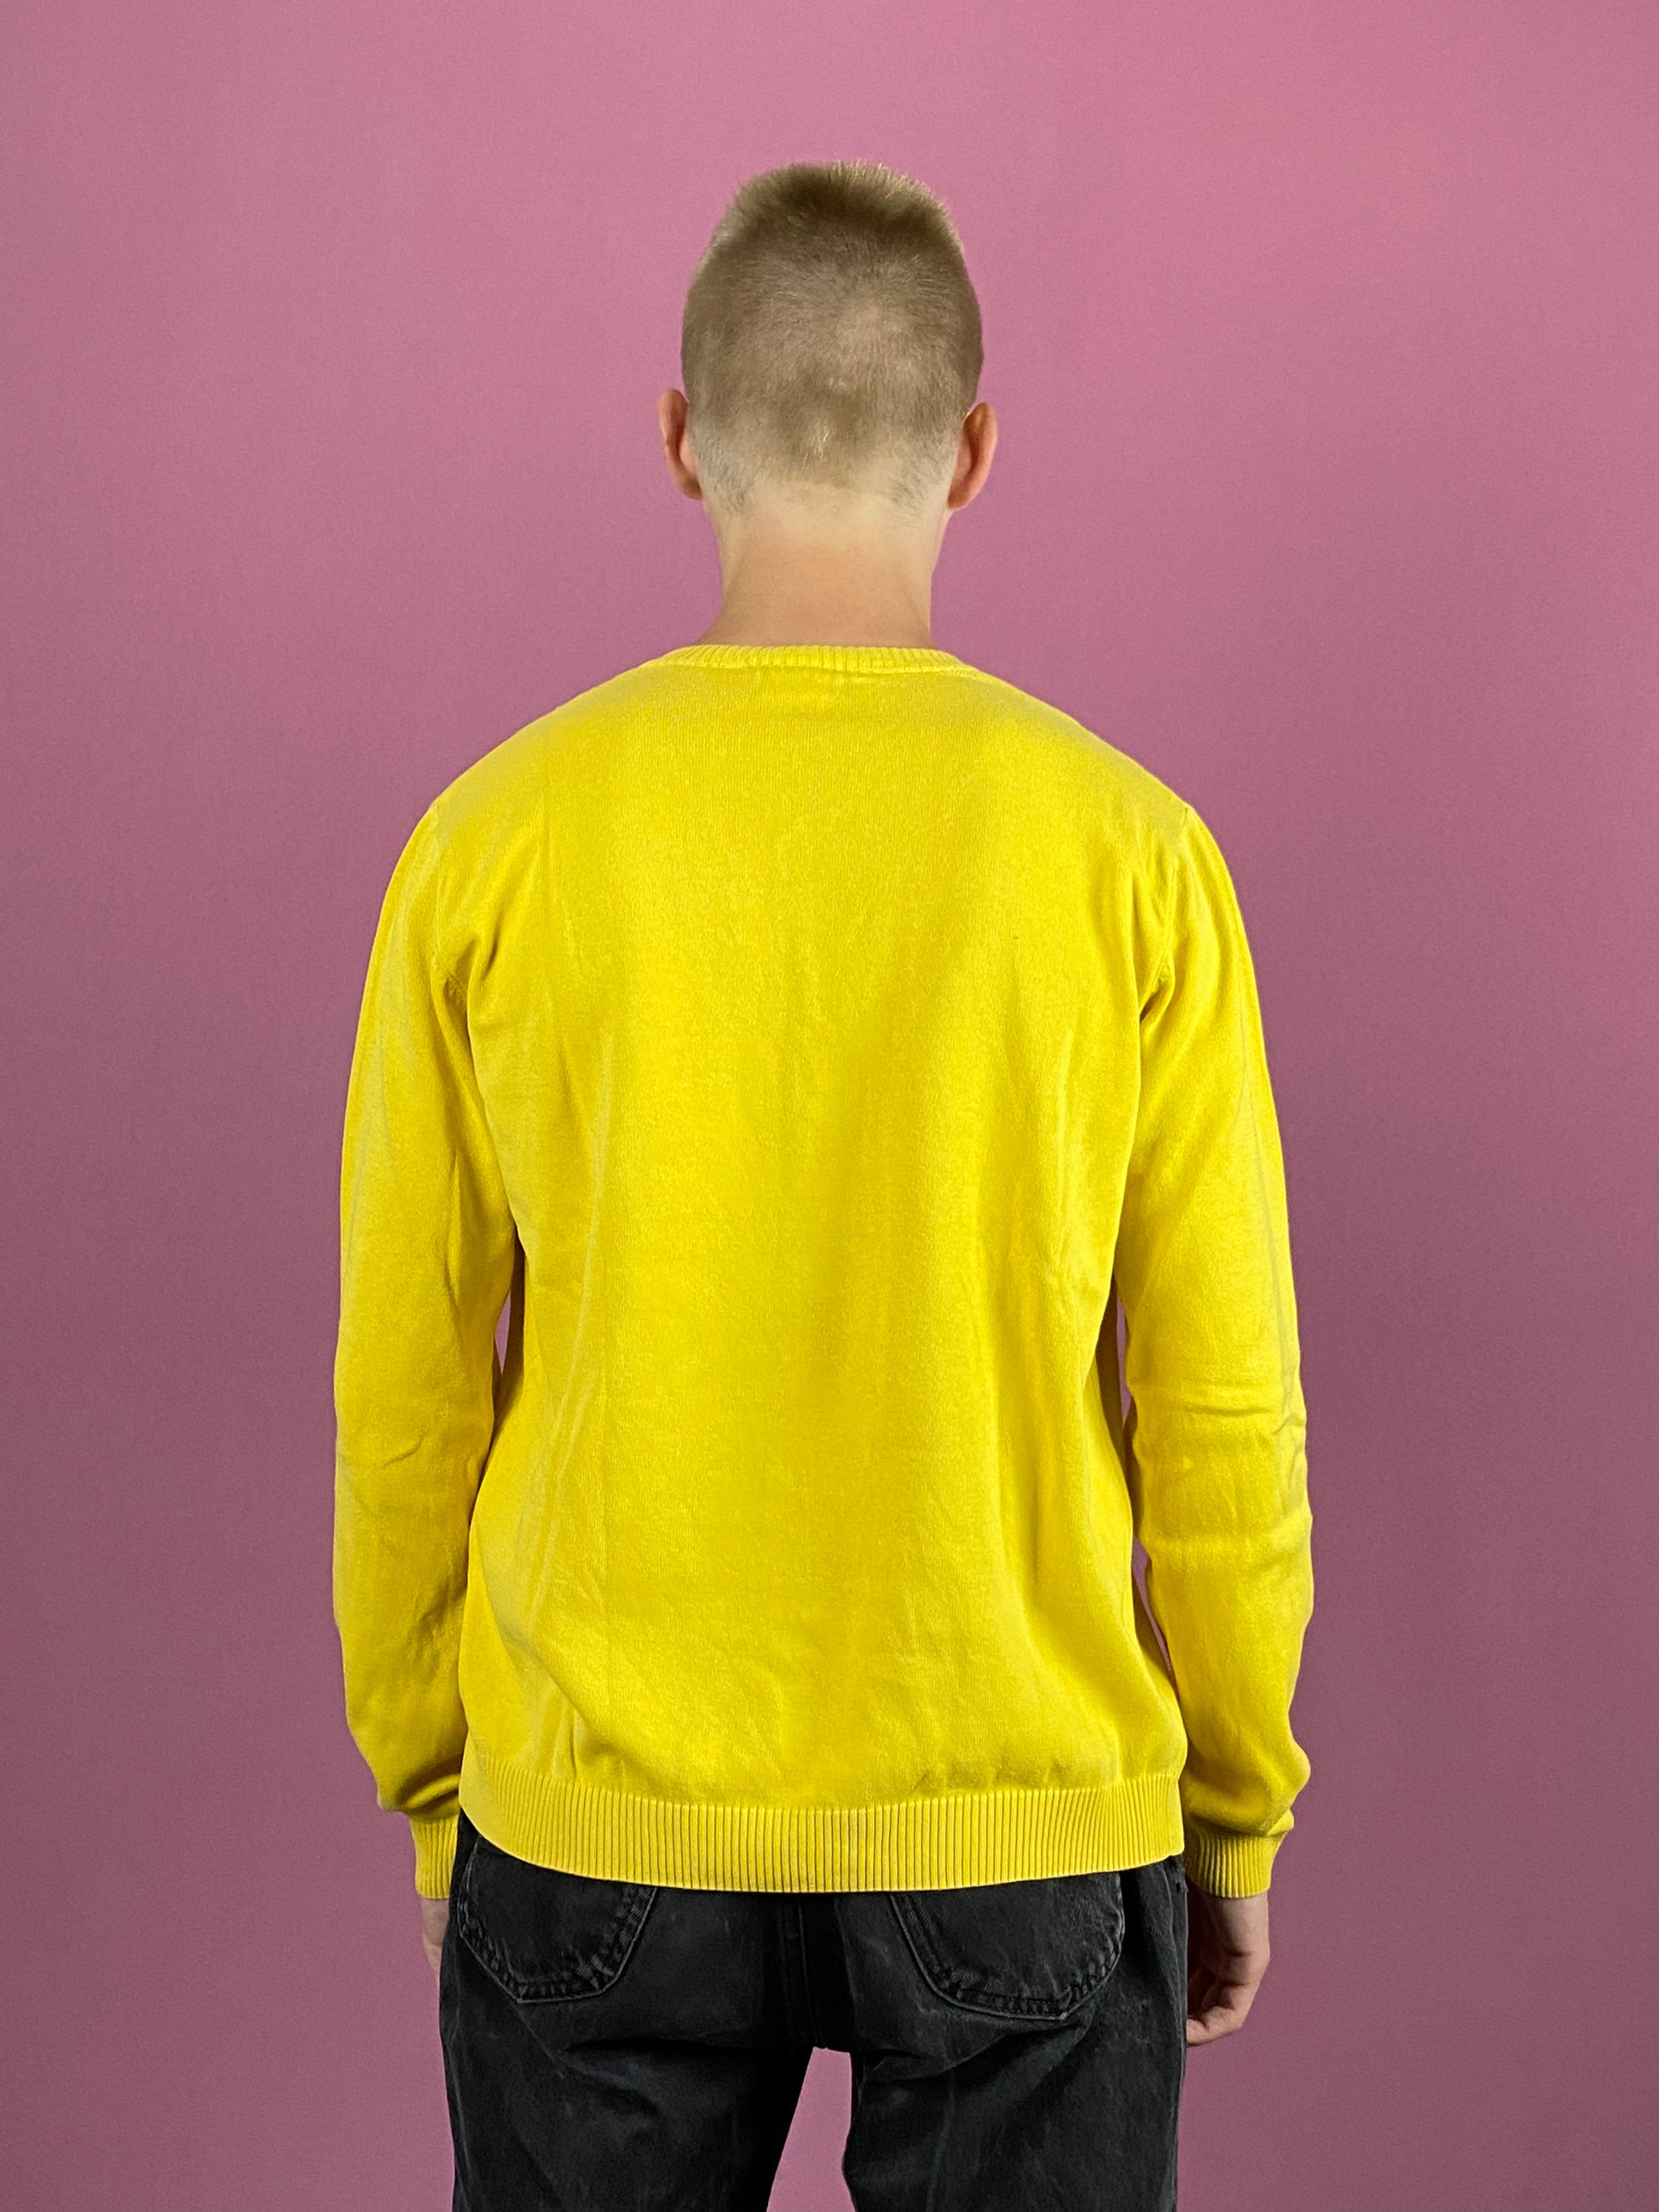 Lacoste Vintage Men's V Neck Sweater - Medium Yellow Cotton